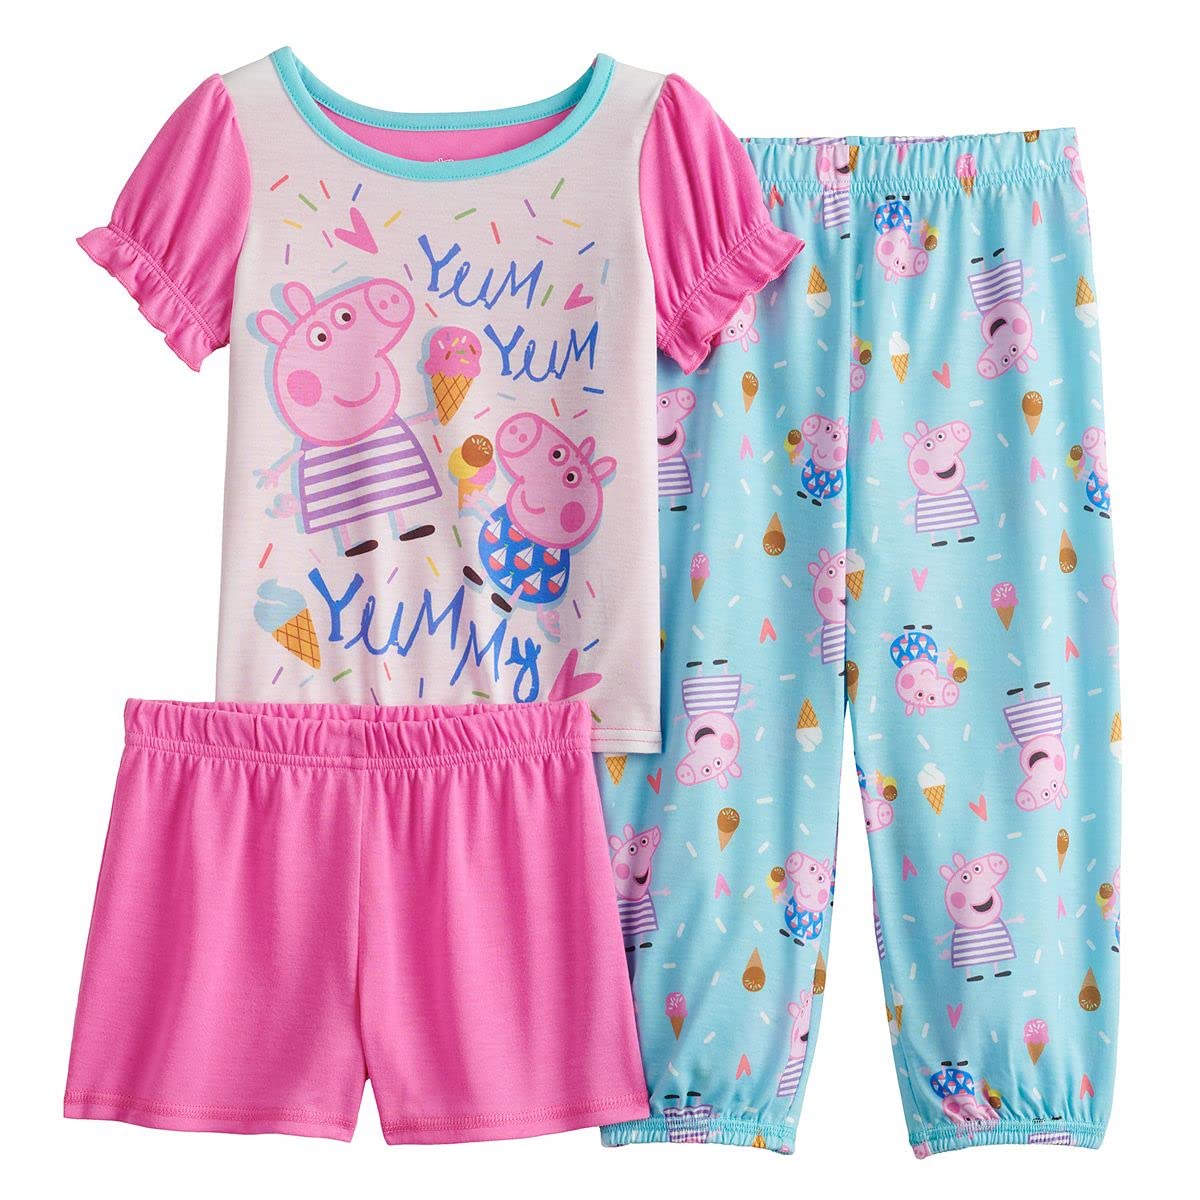 Peppa Pig Girl's YUM YUM YUMMY 3pc Pajama Set, Blue/Pink, 3T